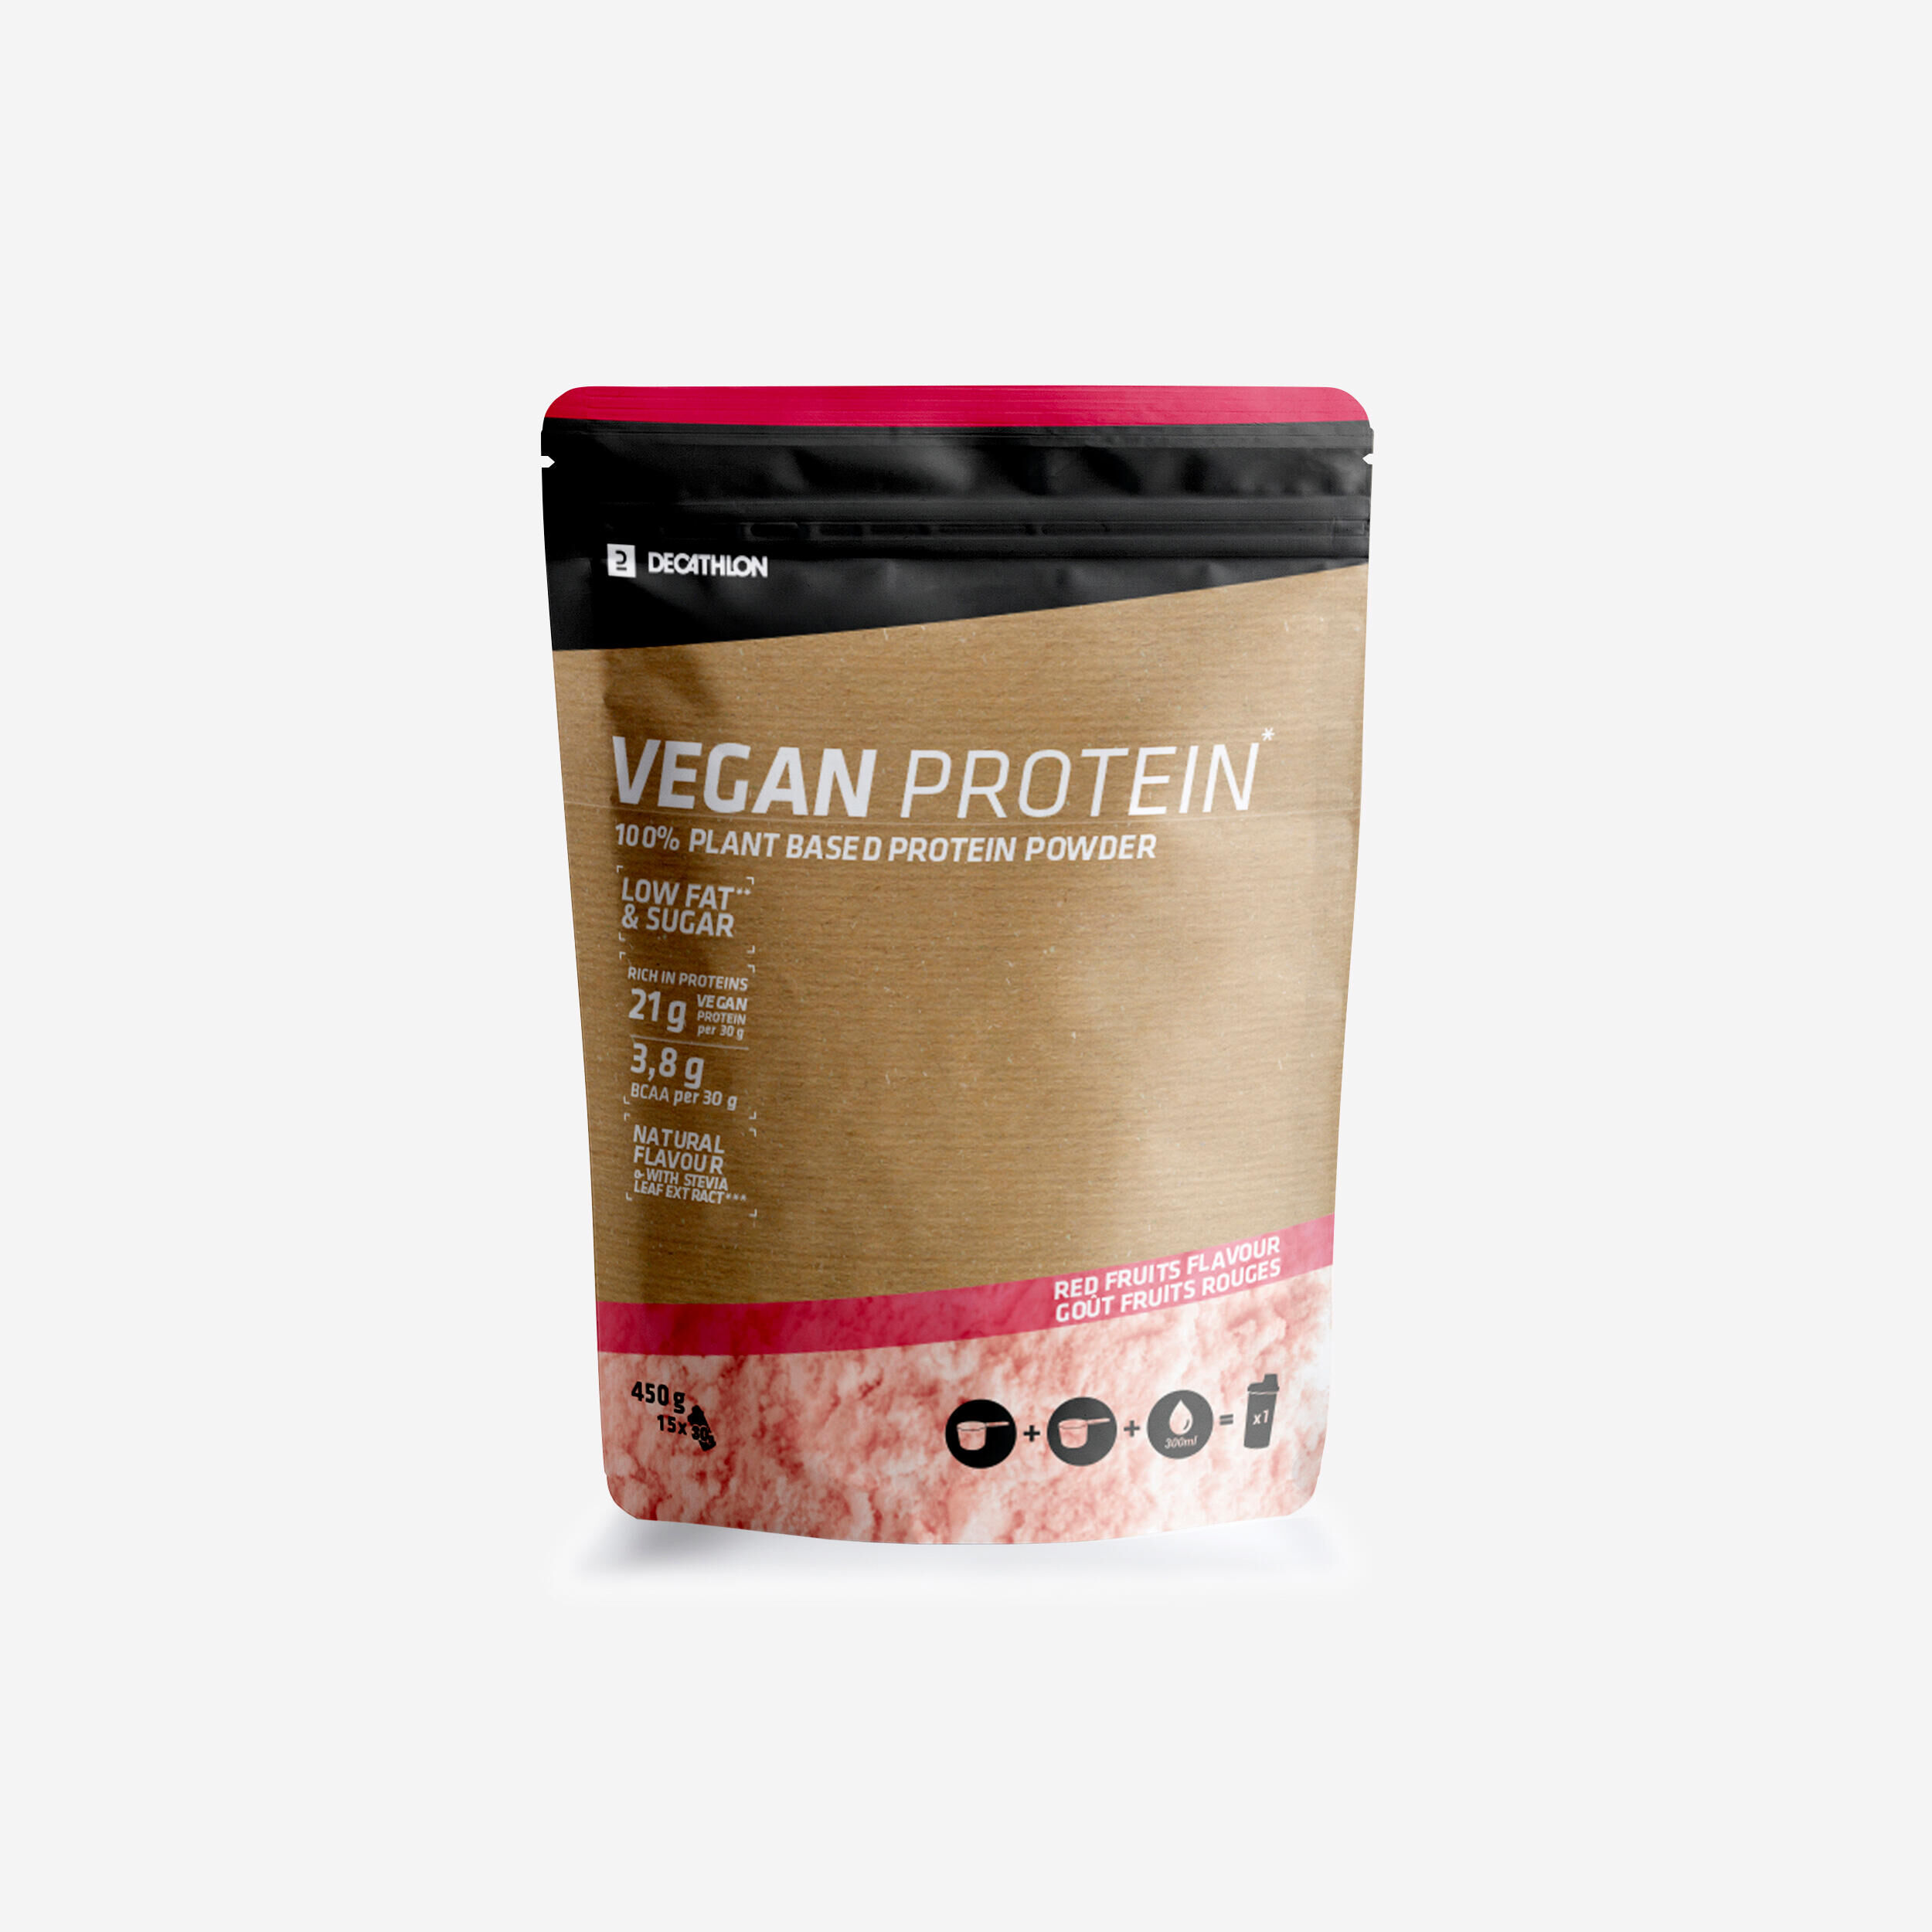 CORENGTH Vegan Protein 450g - Mixed Berries Flavour